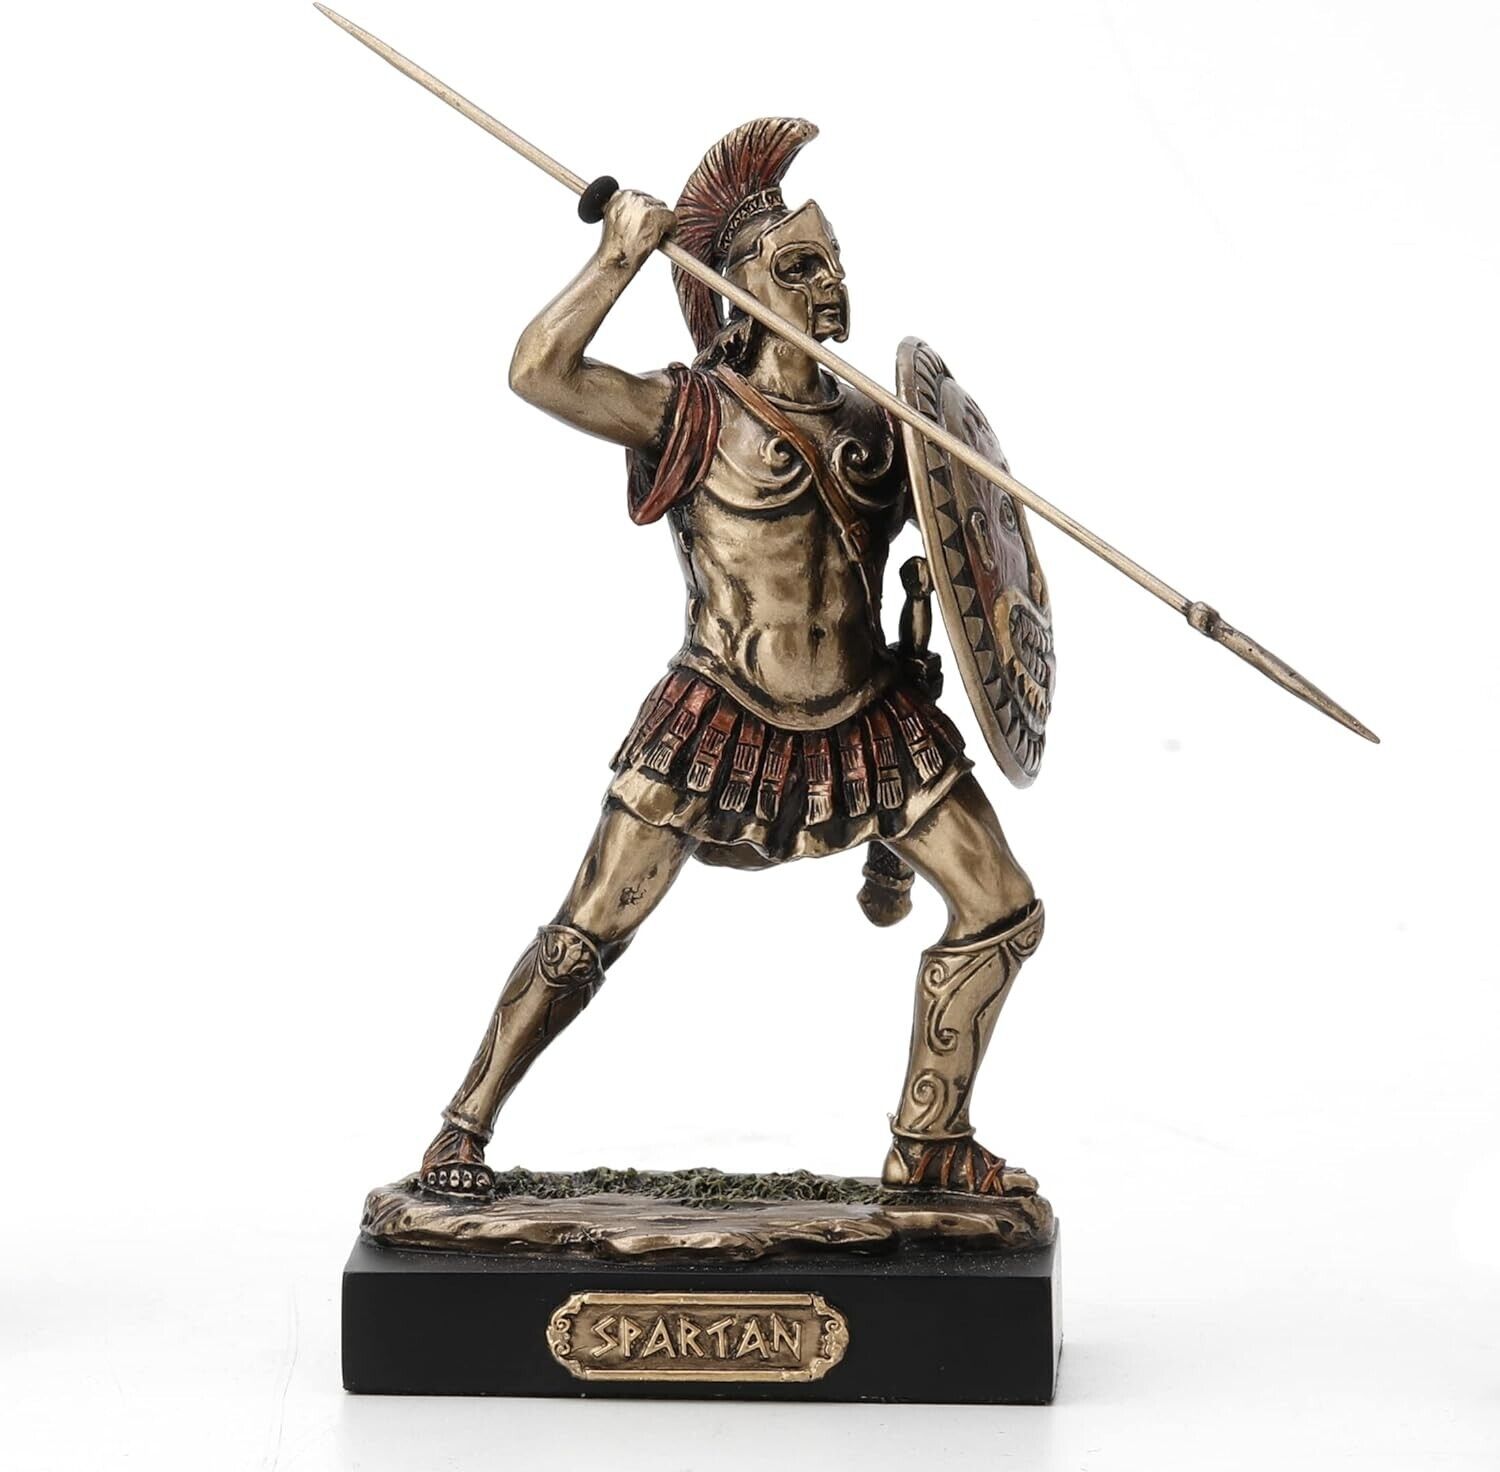 Spartan Warrior Holding Spear And Shield Miniature Figurine